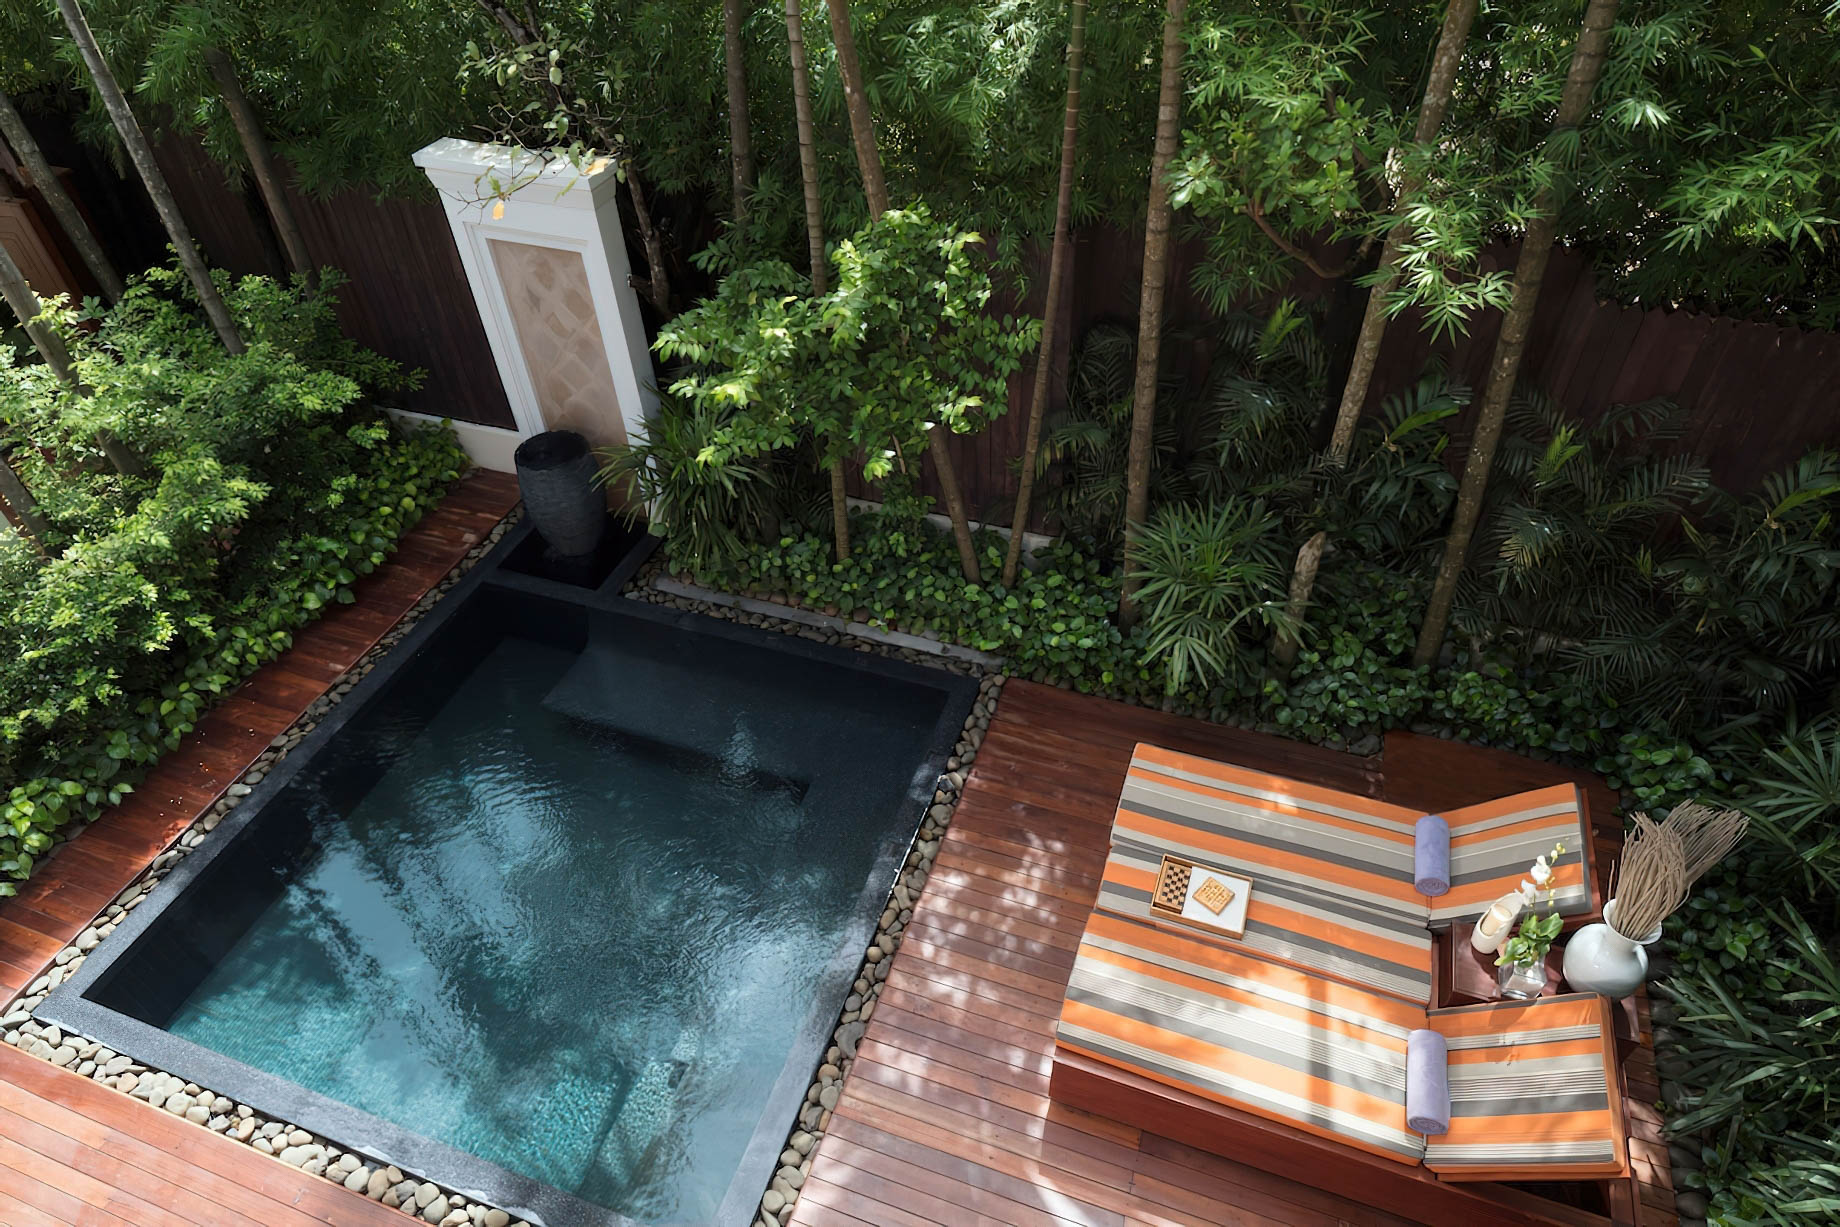 Anantara Angkor Resort - Siem Reap, Cambodia - Henri Mouhot Two Bedroom Suite Pool